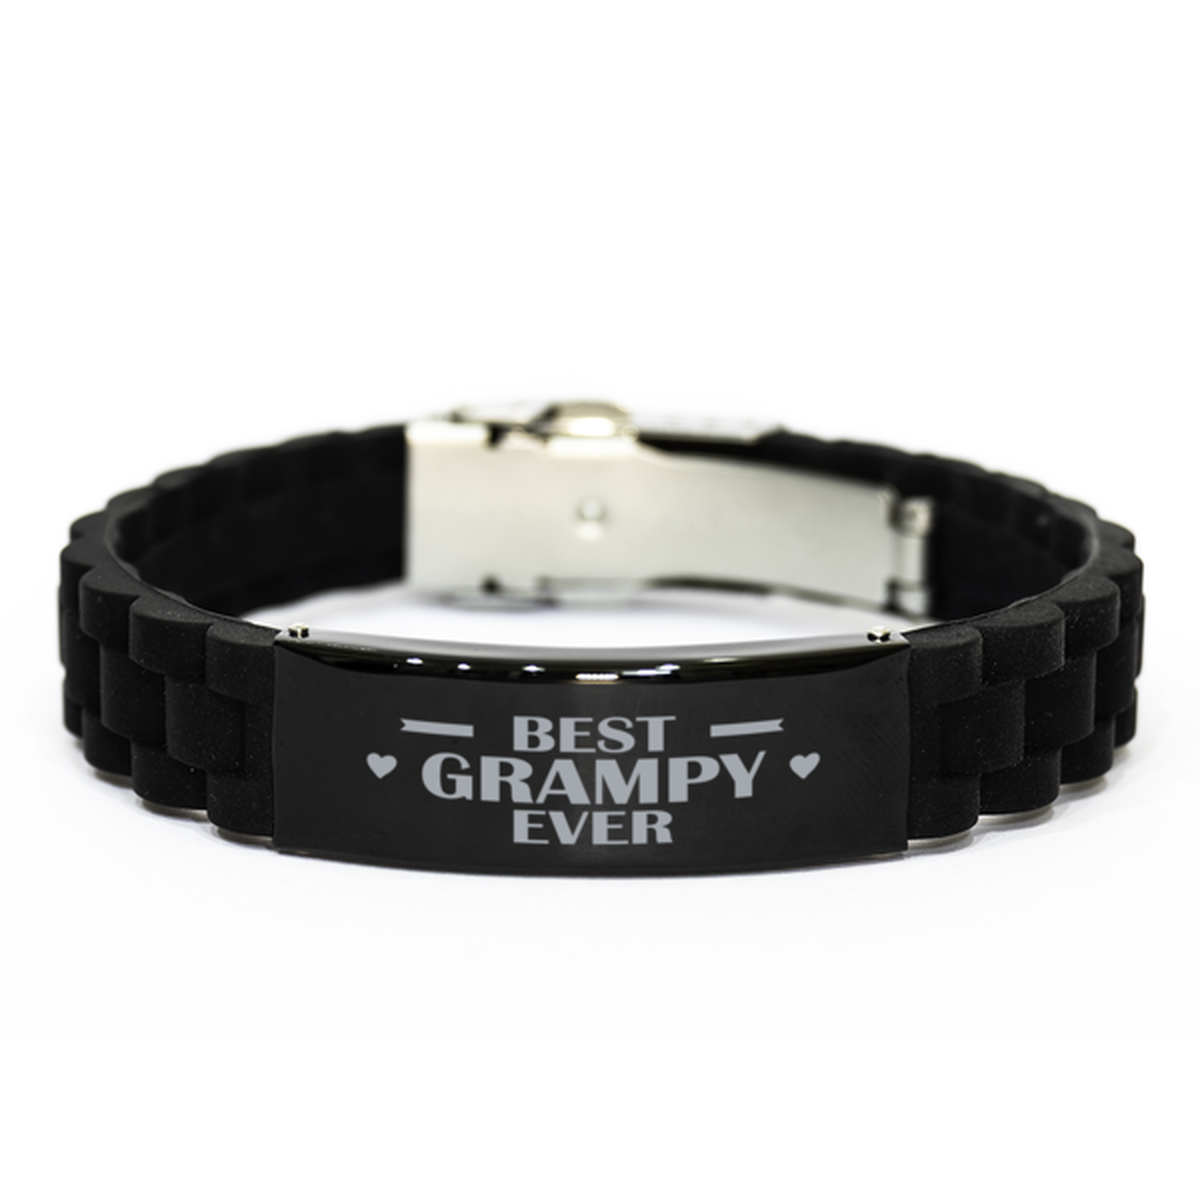 Best Grampy Ever Grampy Gifts, Funny Black Engraved Bracelet For Grampy, Family Gifts For Women